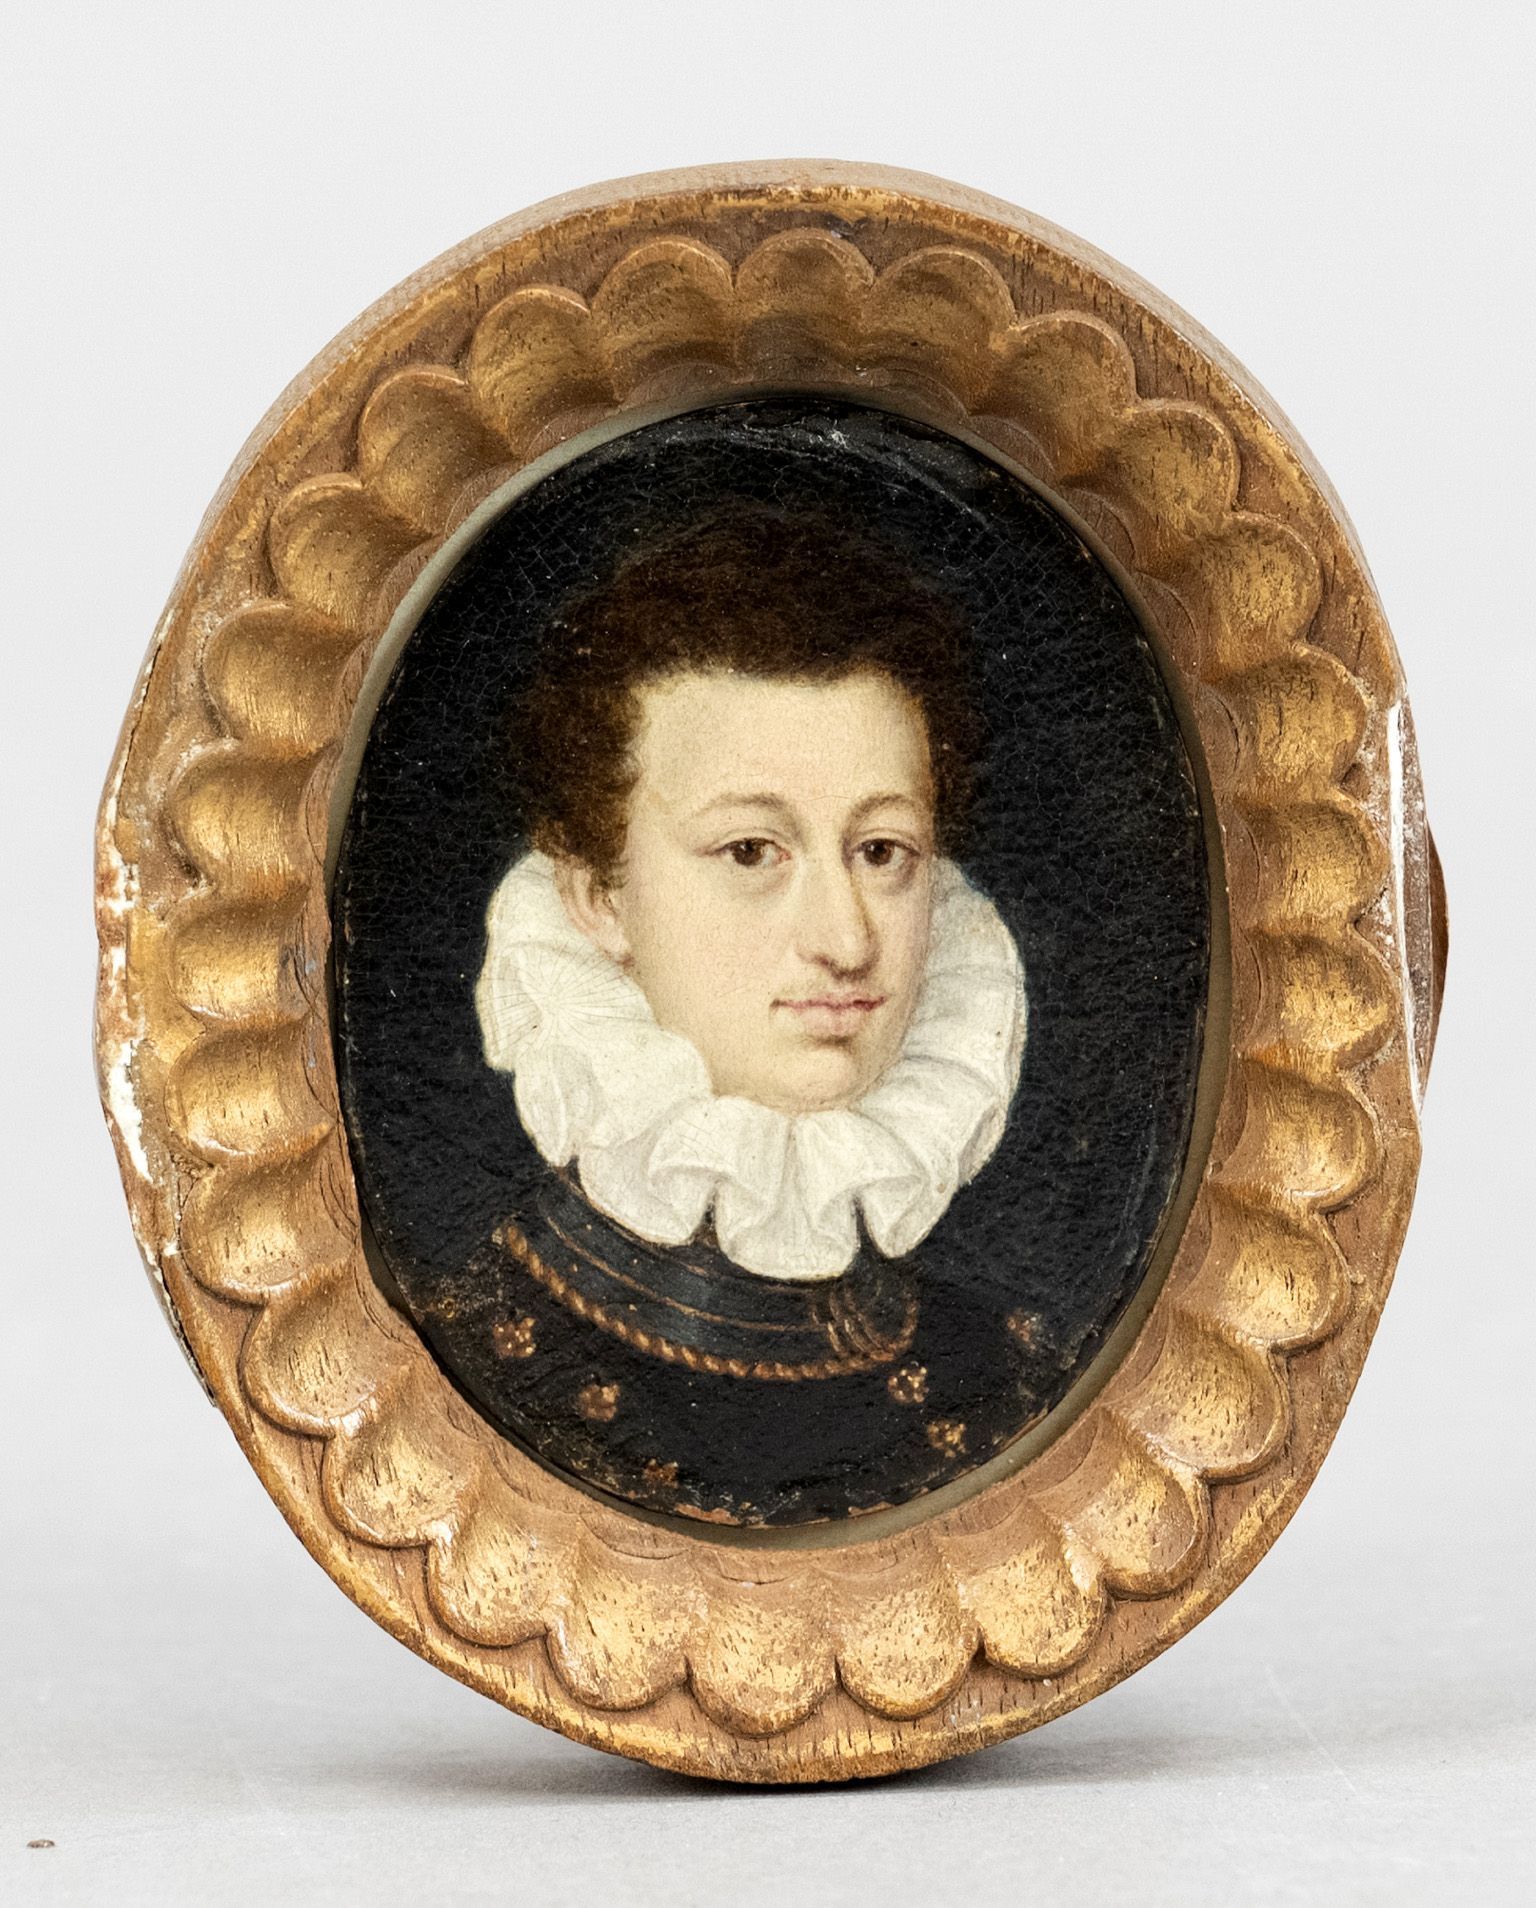 Null 未知艺术家，约1600年，穿胸甲的贵族肖像缩影，铜上油彩，5.2 x 4厘米，装裱后7 x 6厘米